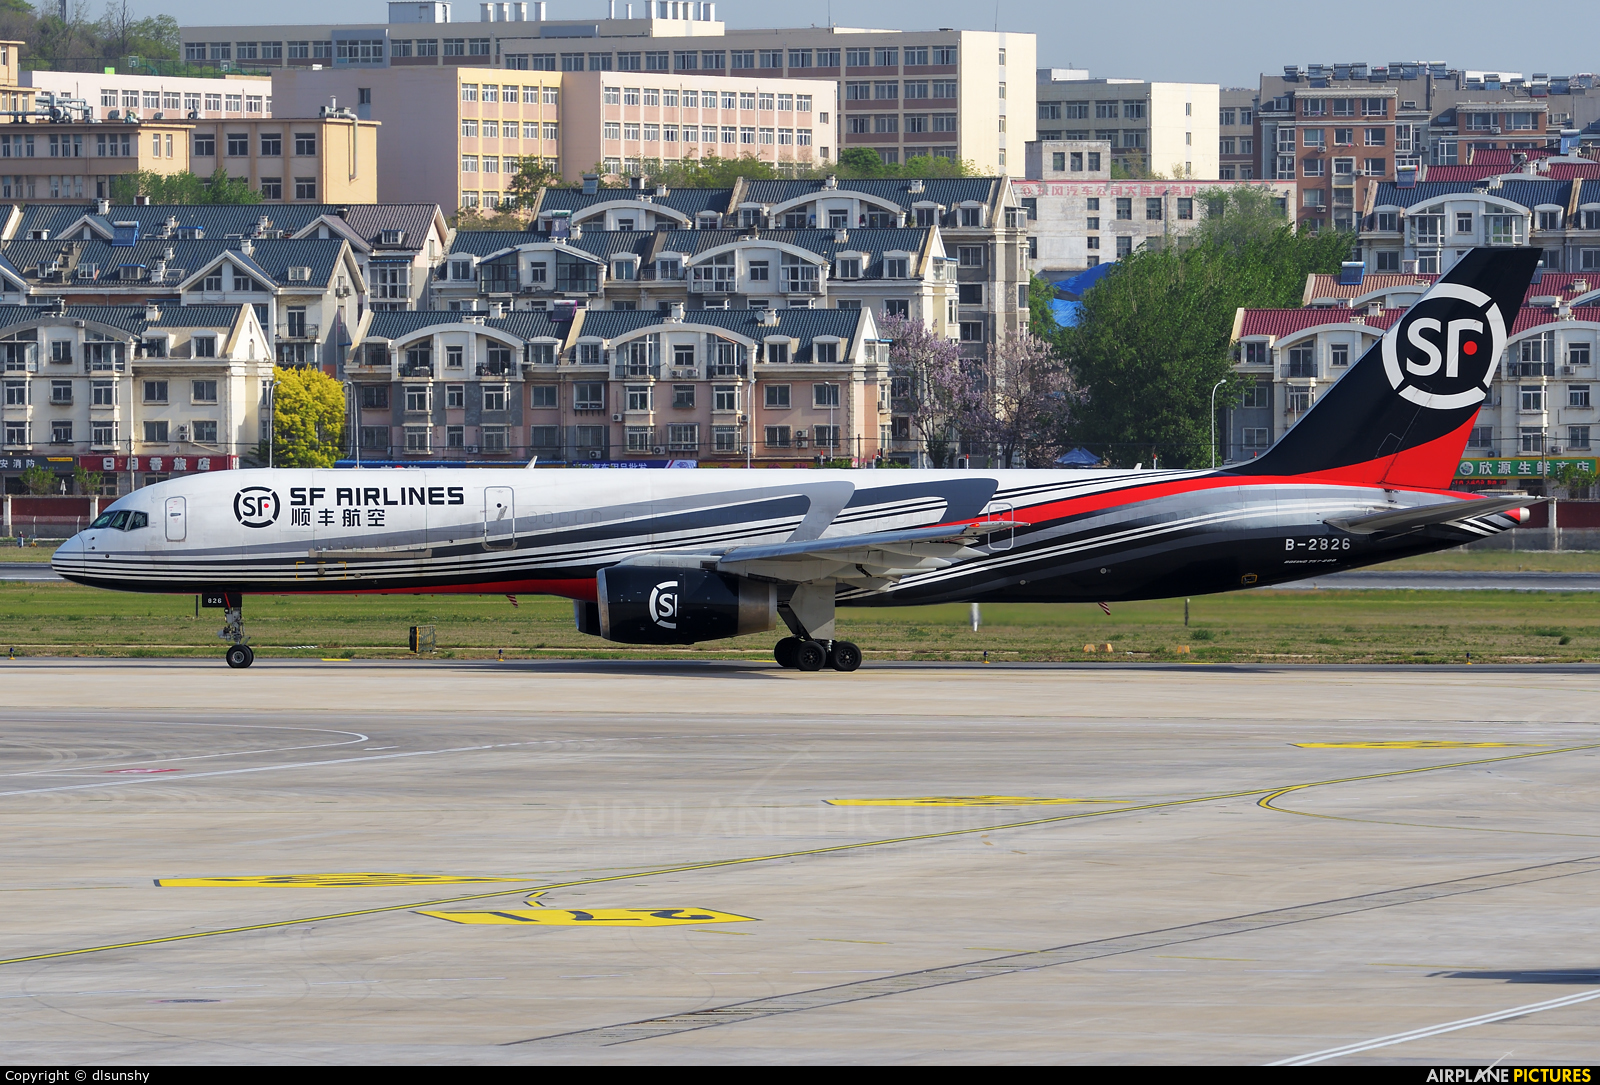 SF Airlines B-2826 aircraft at Dalian Zhoushuizi Int'l